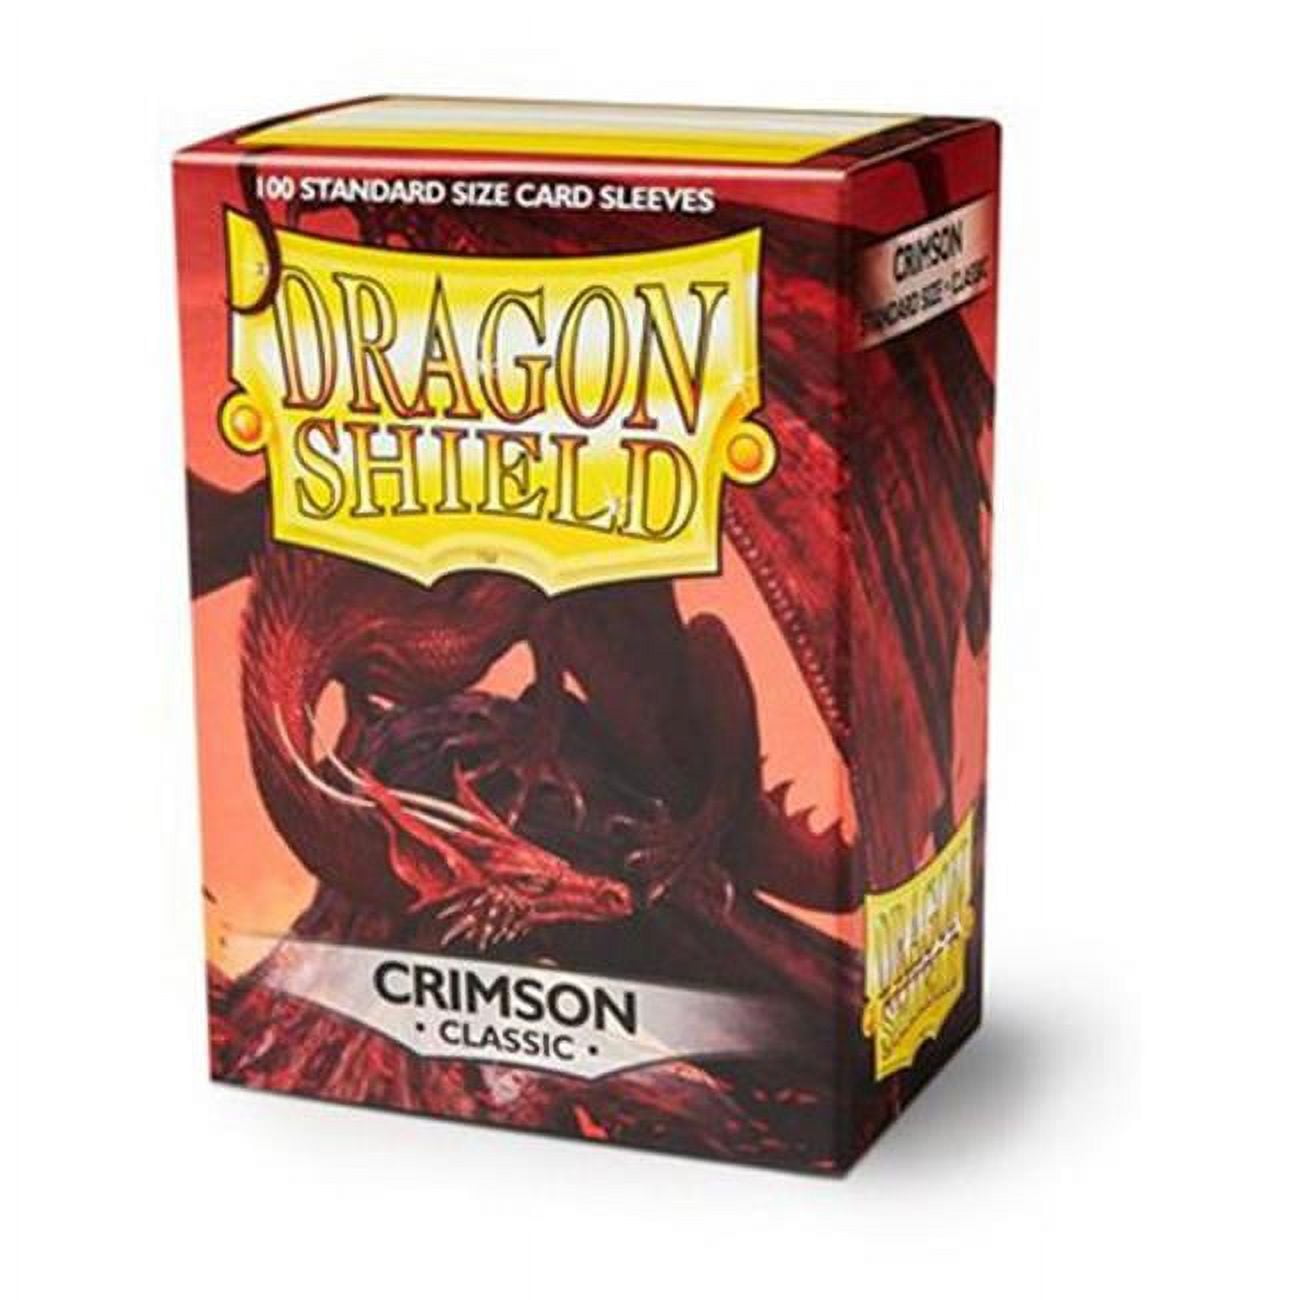 Atm10021 Dragon Shield Crimson Card Sleeves - 100 Count